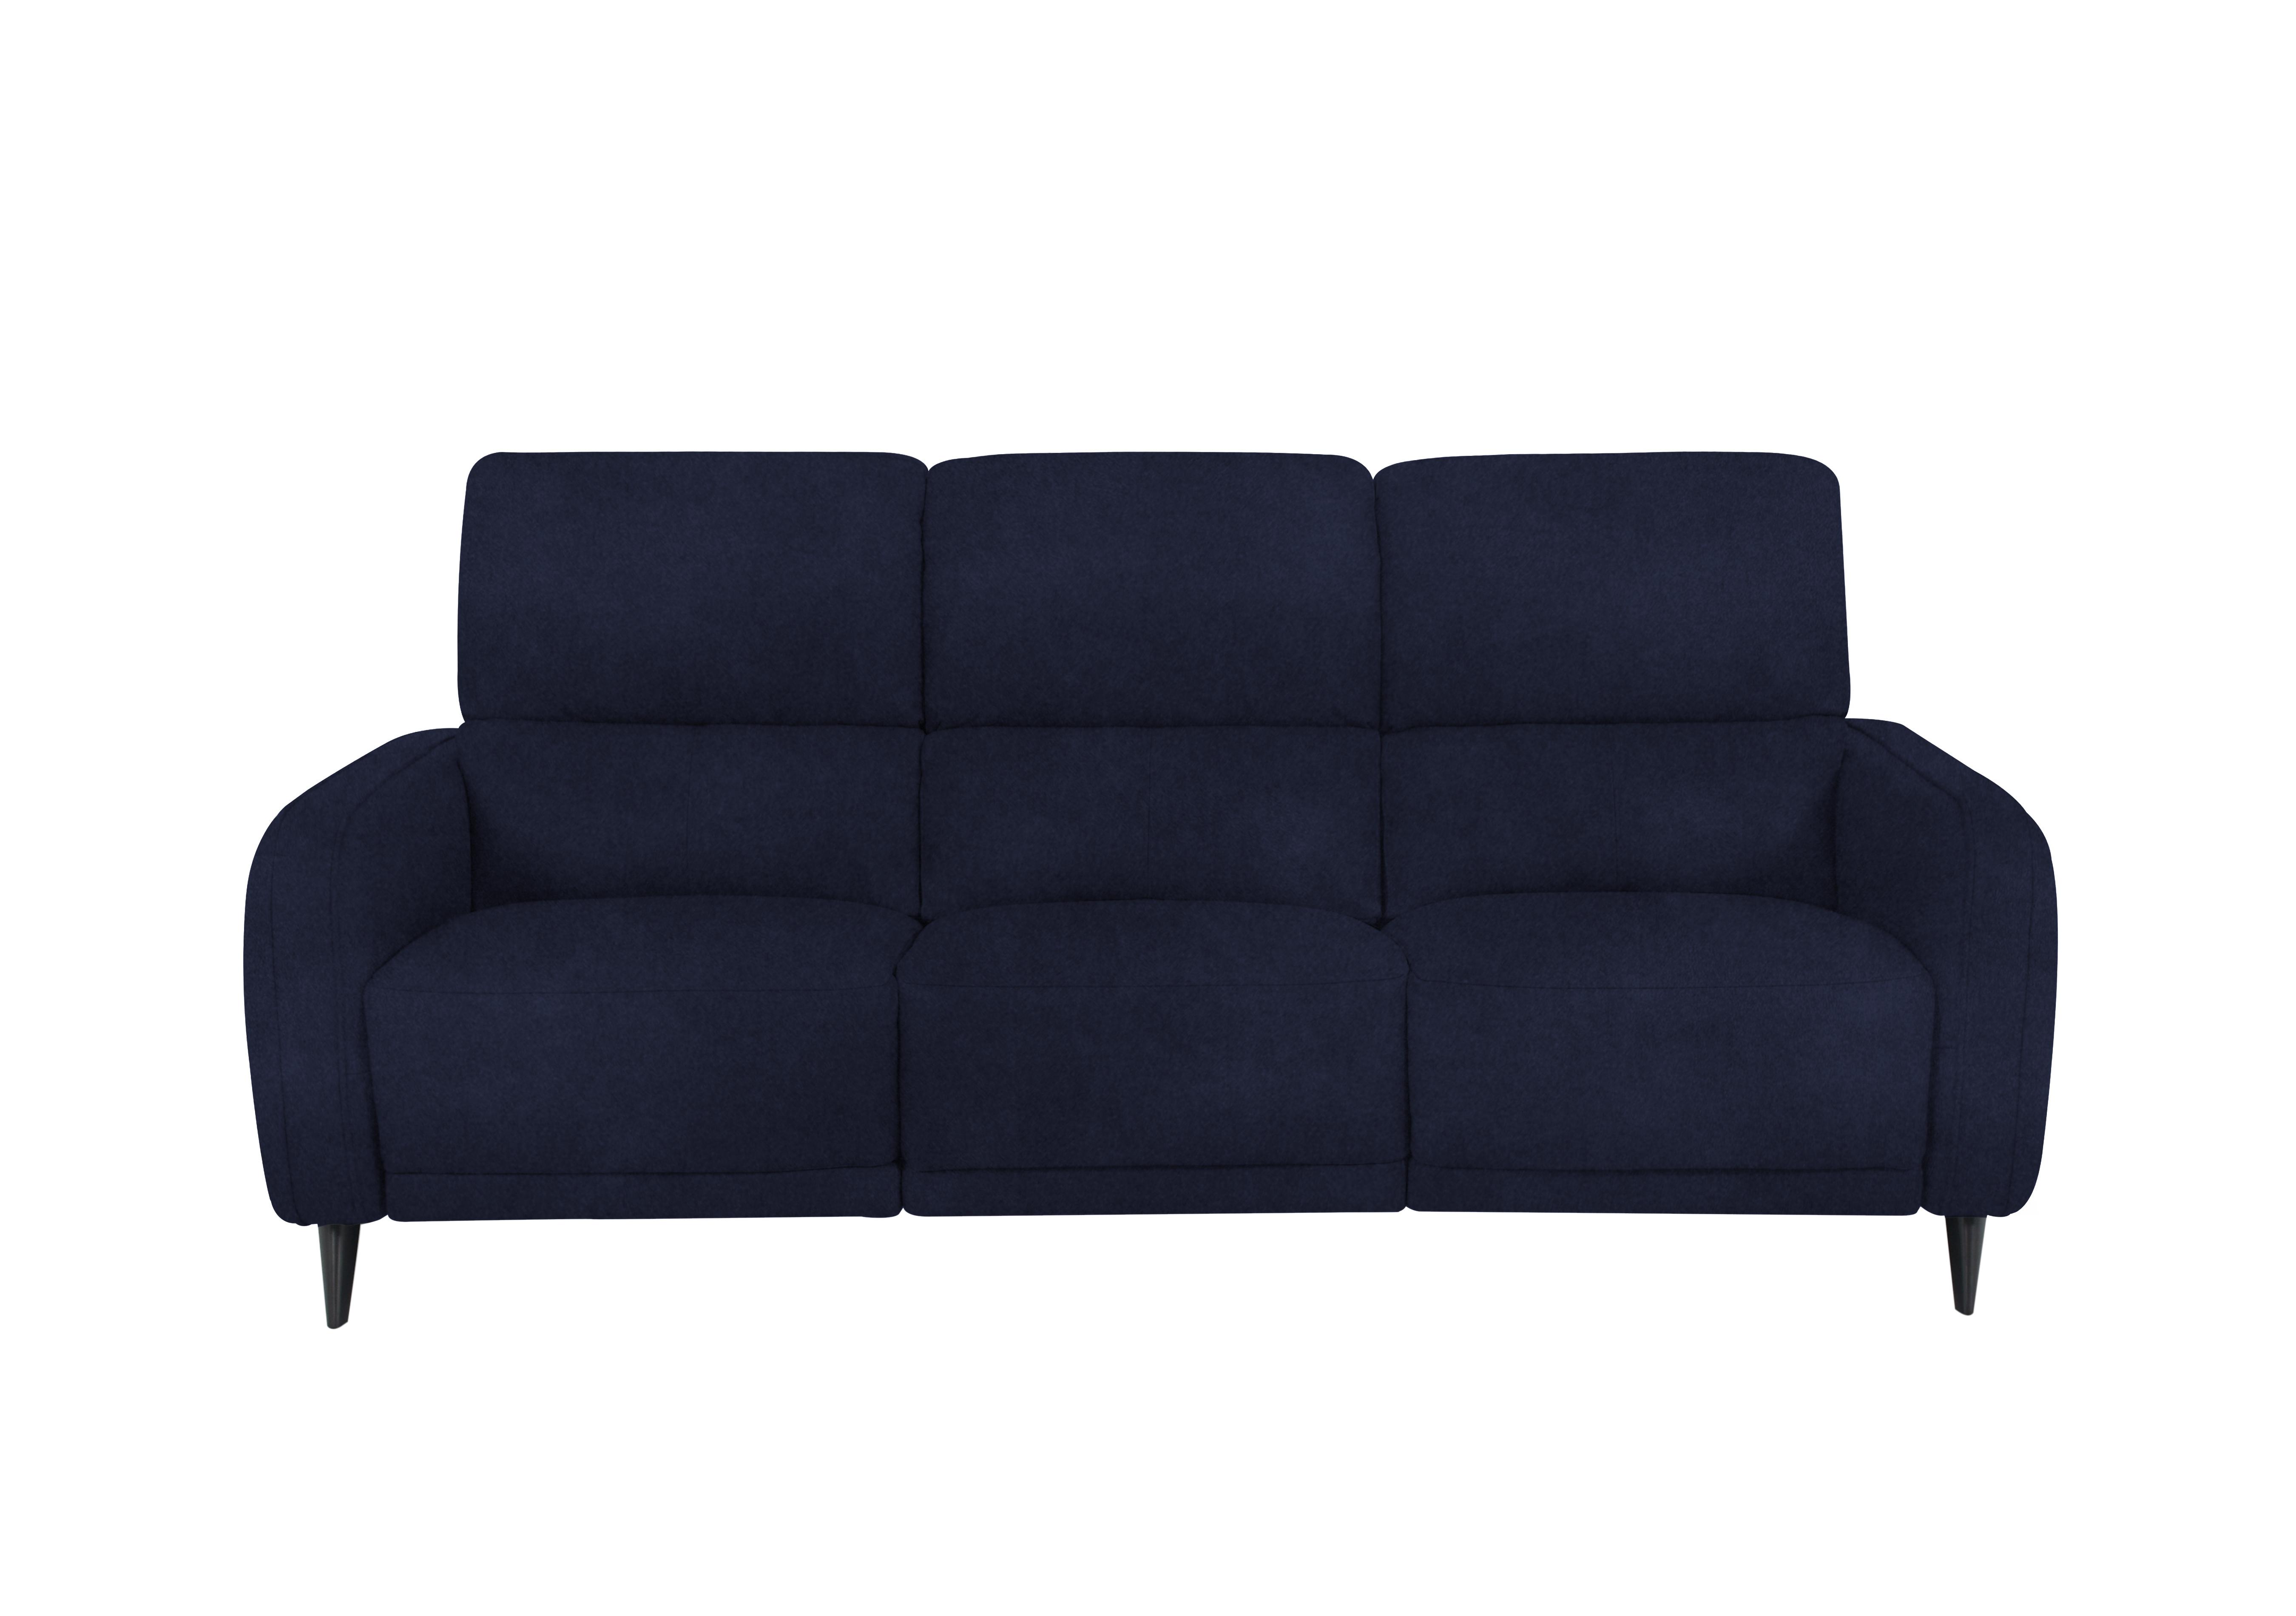 Logan 3 Seater Fabric Sofa in Fab-Meg-R28 Navy on Furniture Village